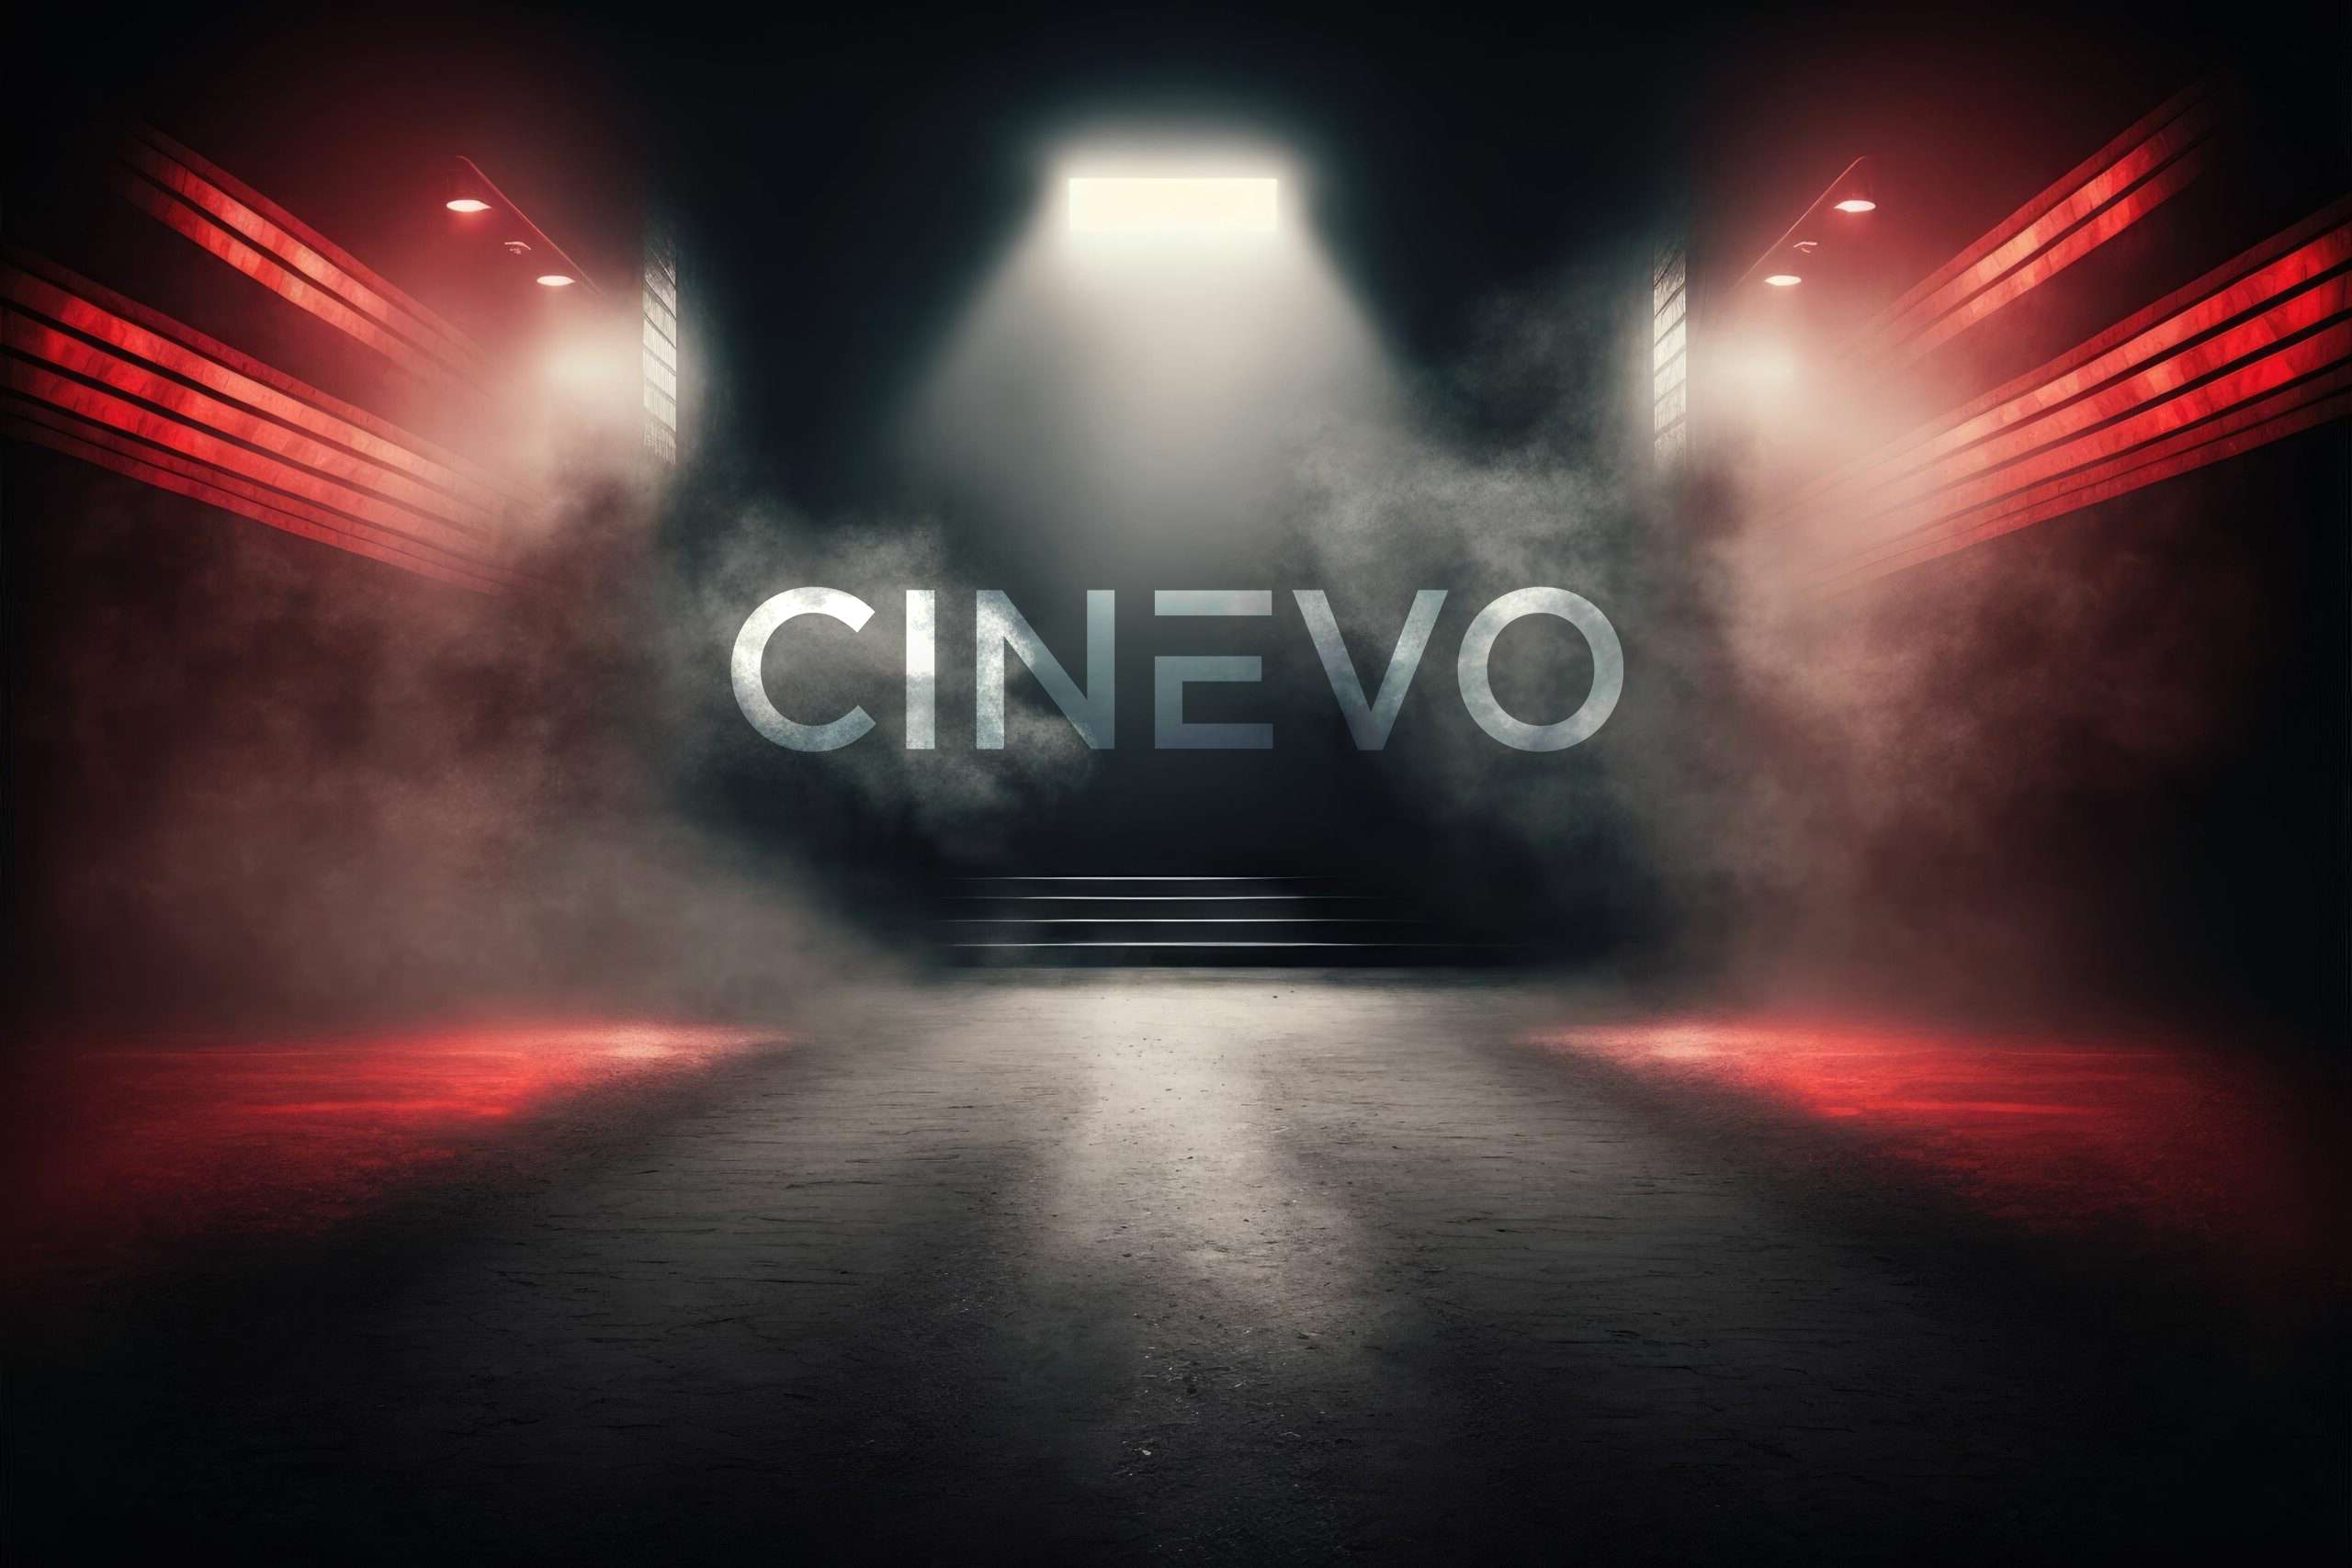 Cinevo Studio Design Consultation for Arizona Businesses, Institutions, Event Centers, and More!